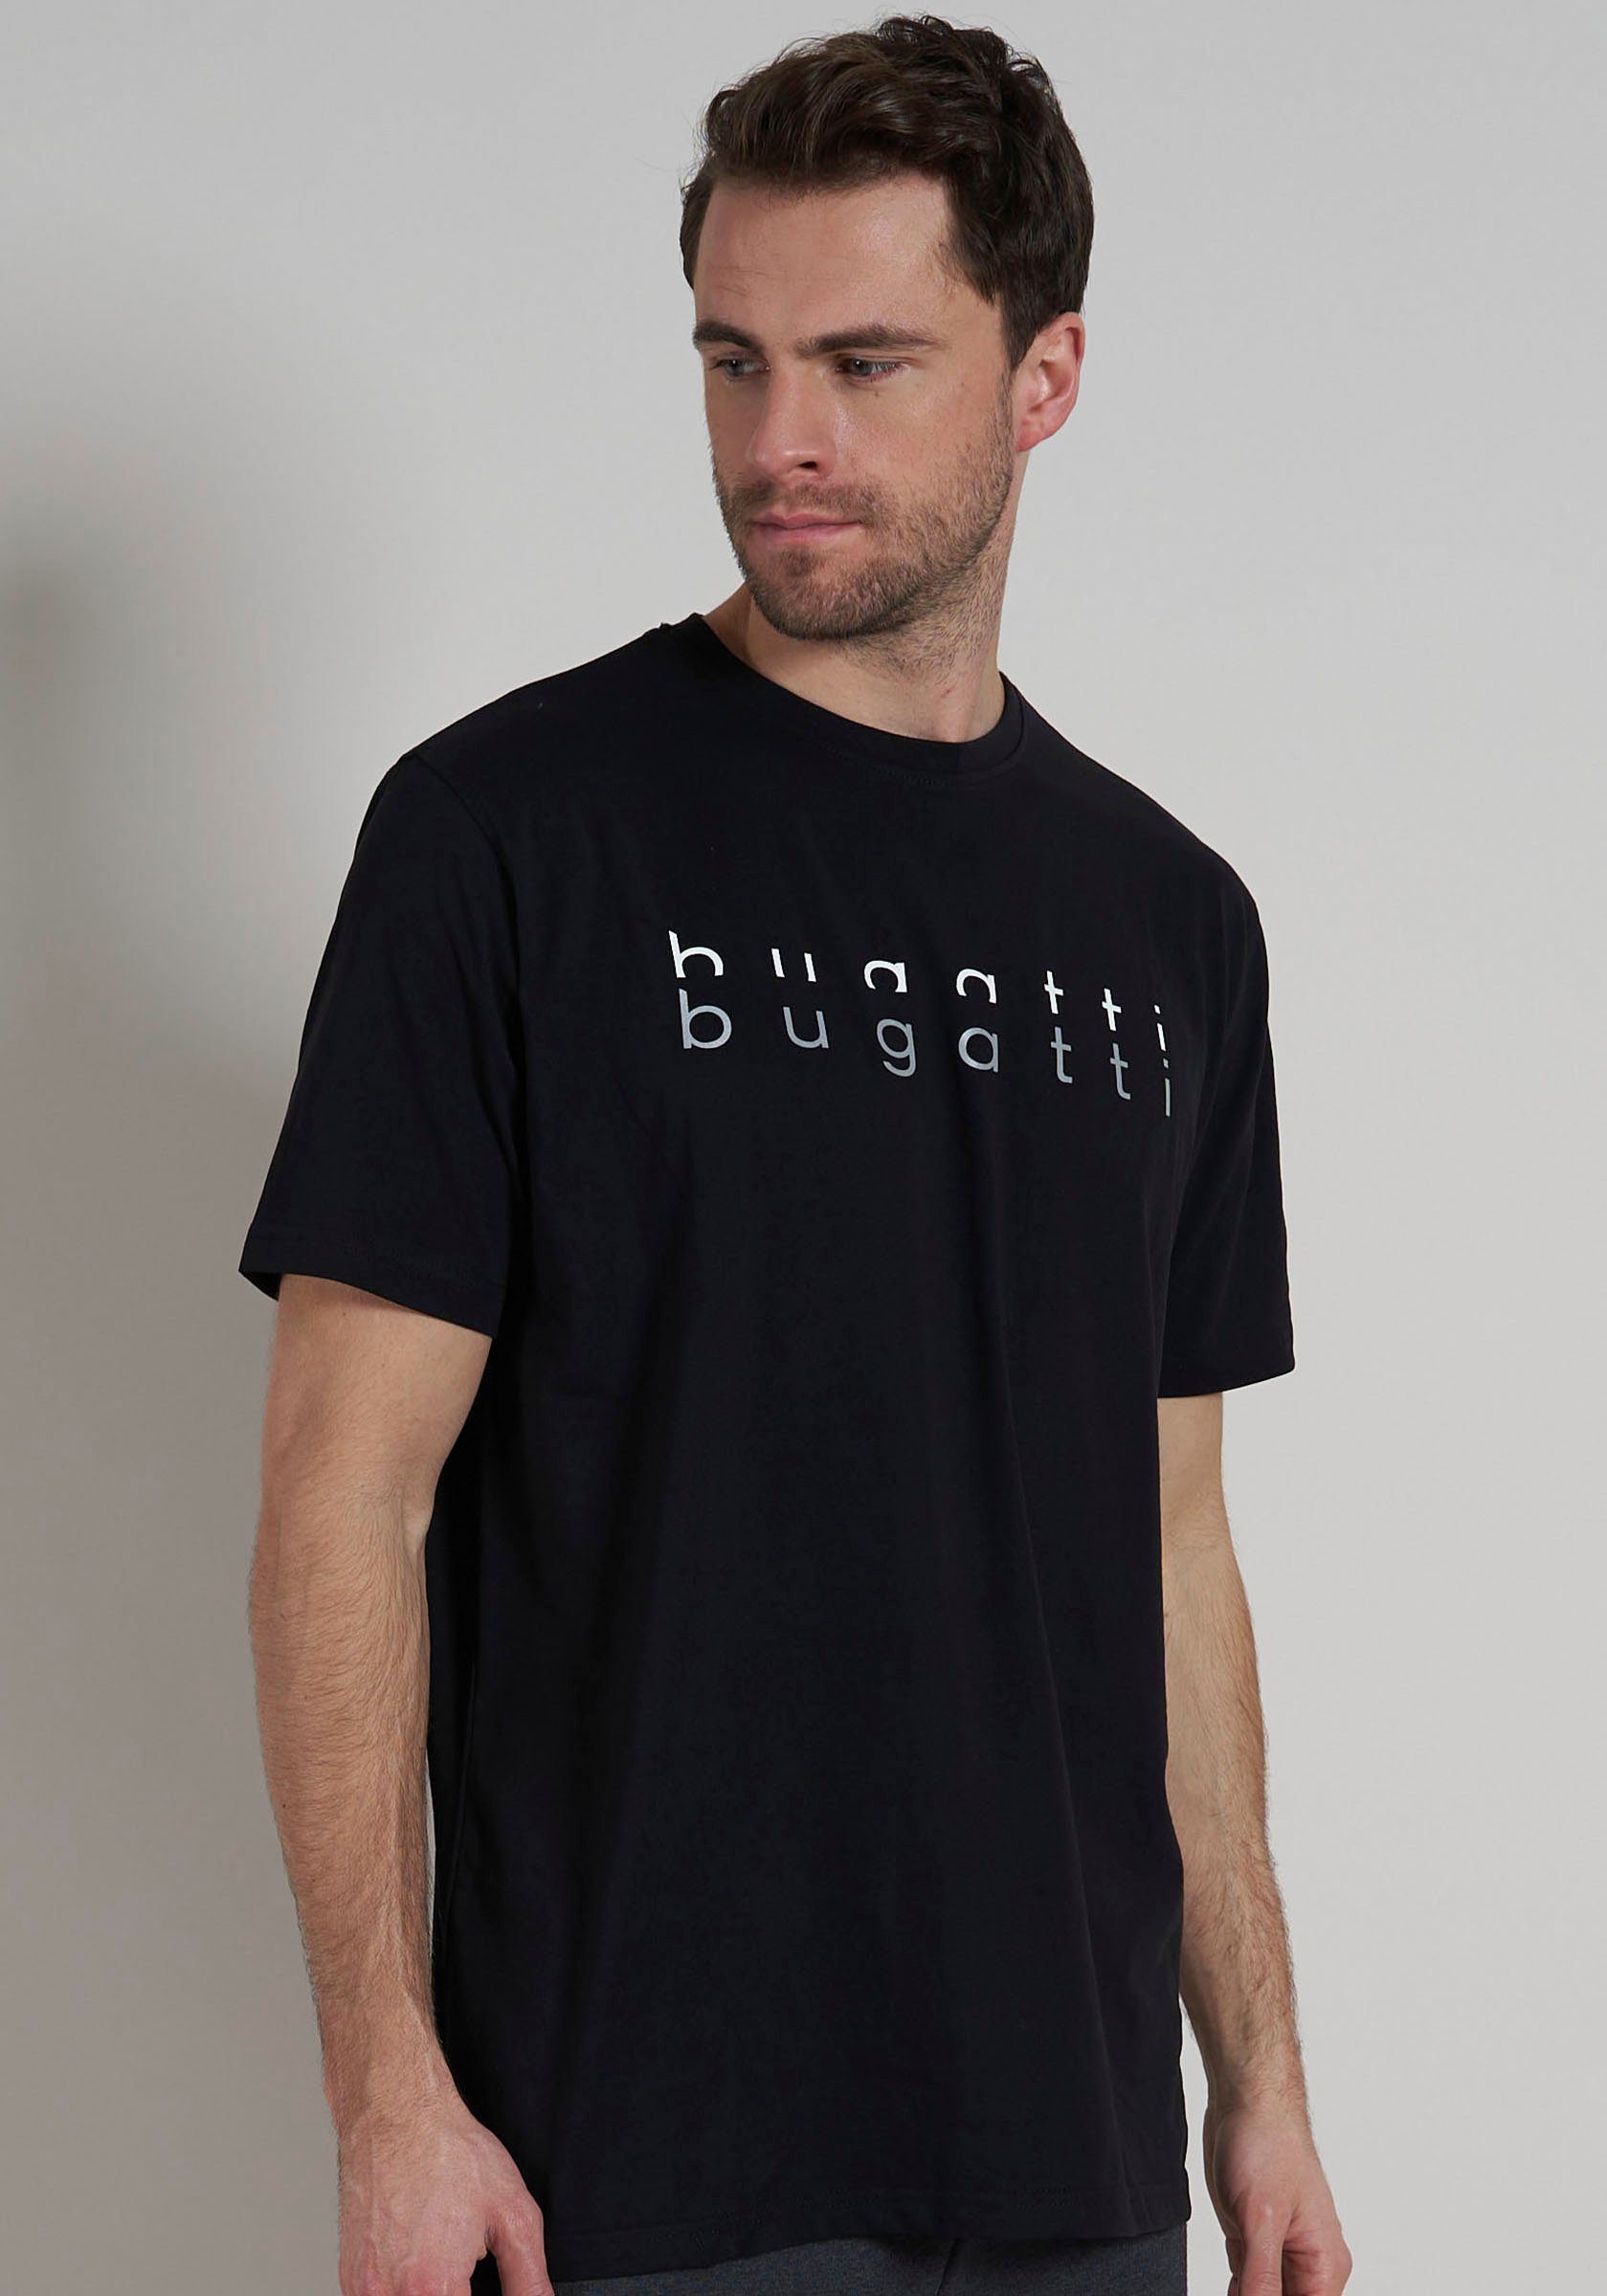 bugatti T-Shirt schwarz-dunkel-uni